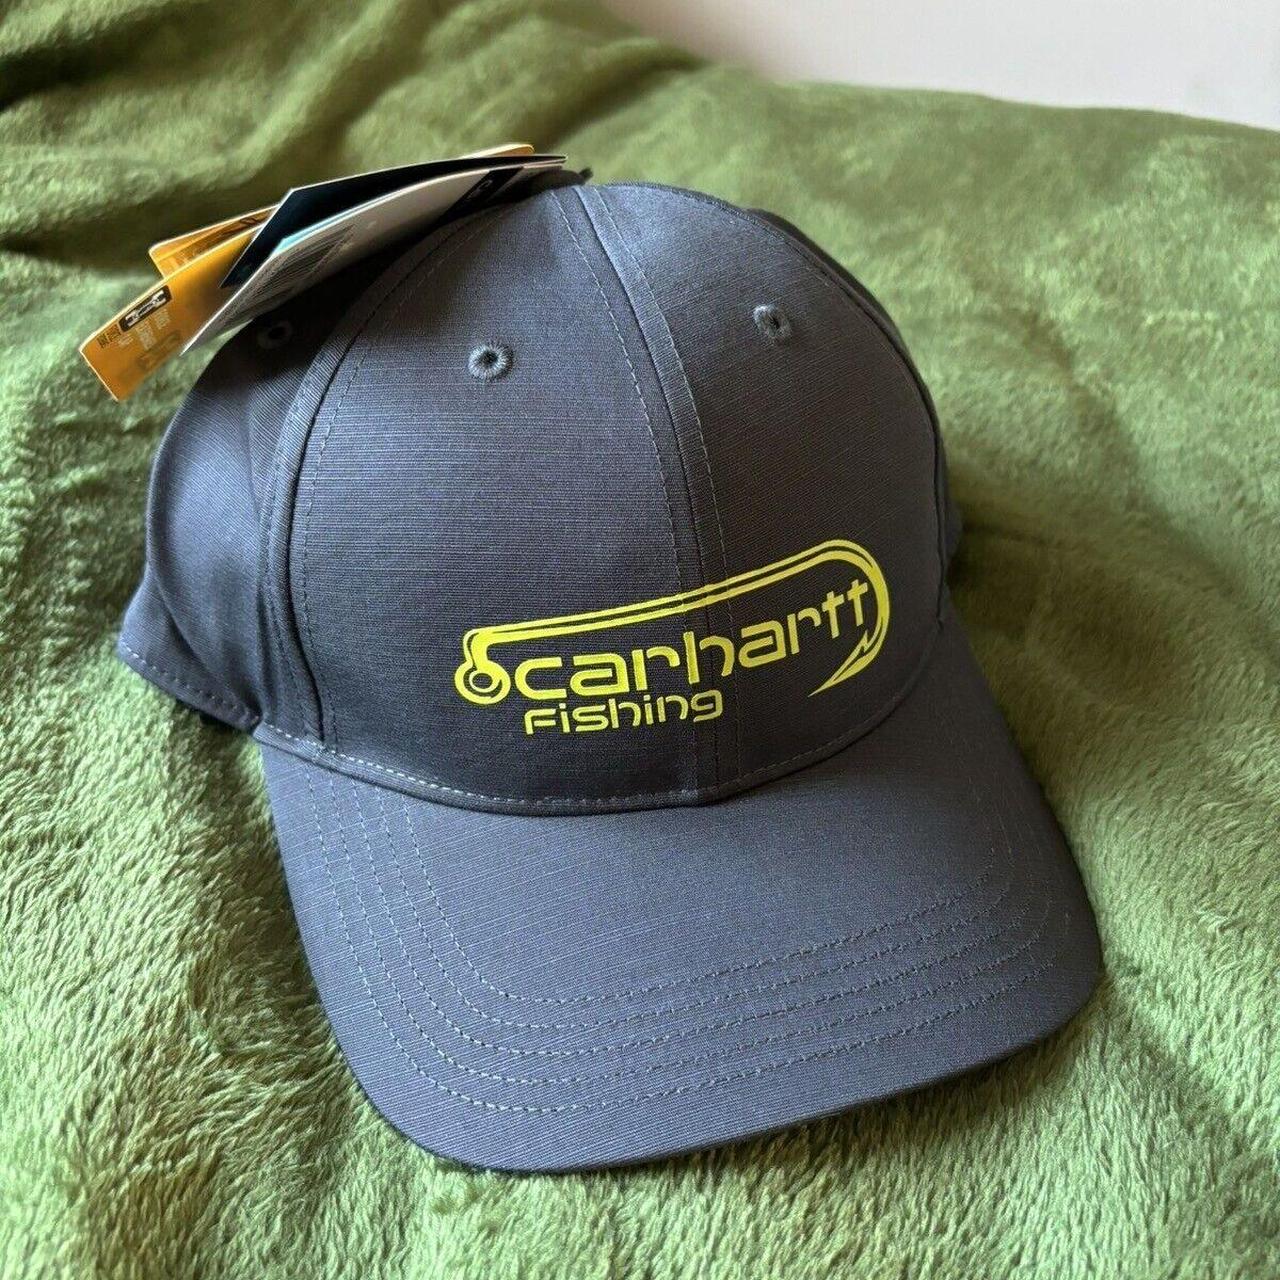 Carhartt Fishing hook grey and green Baseball Cap - Depop